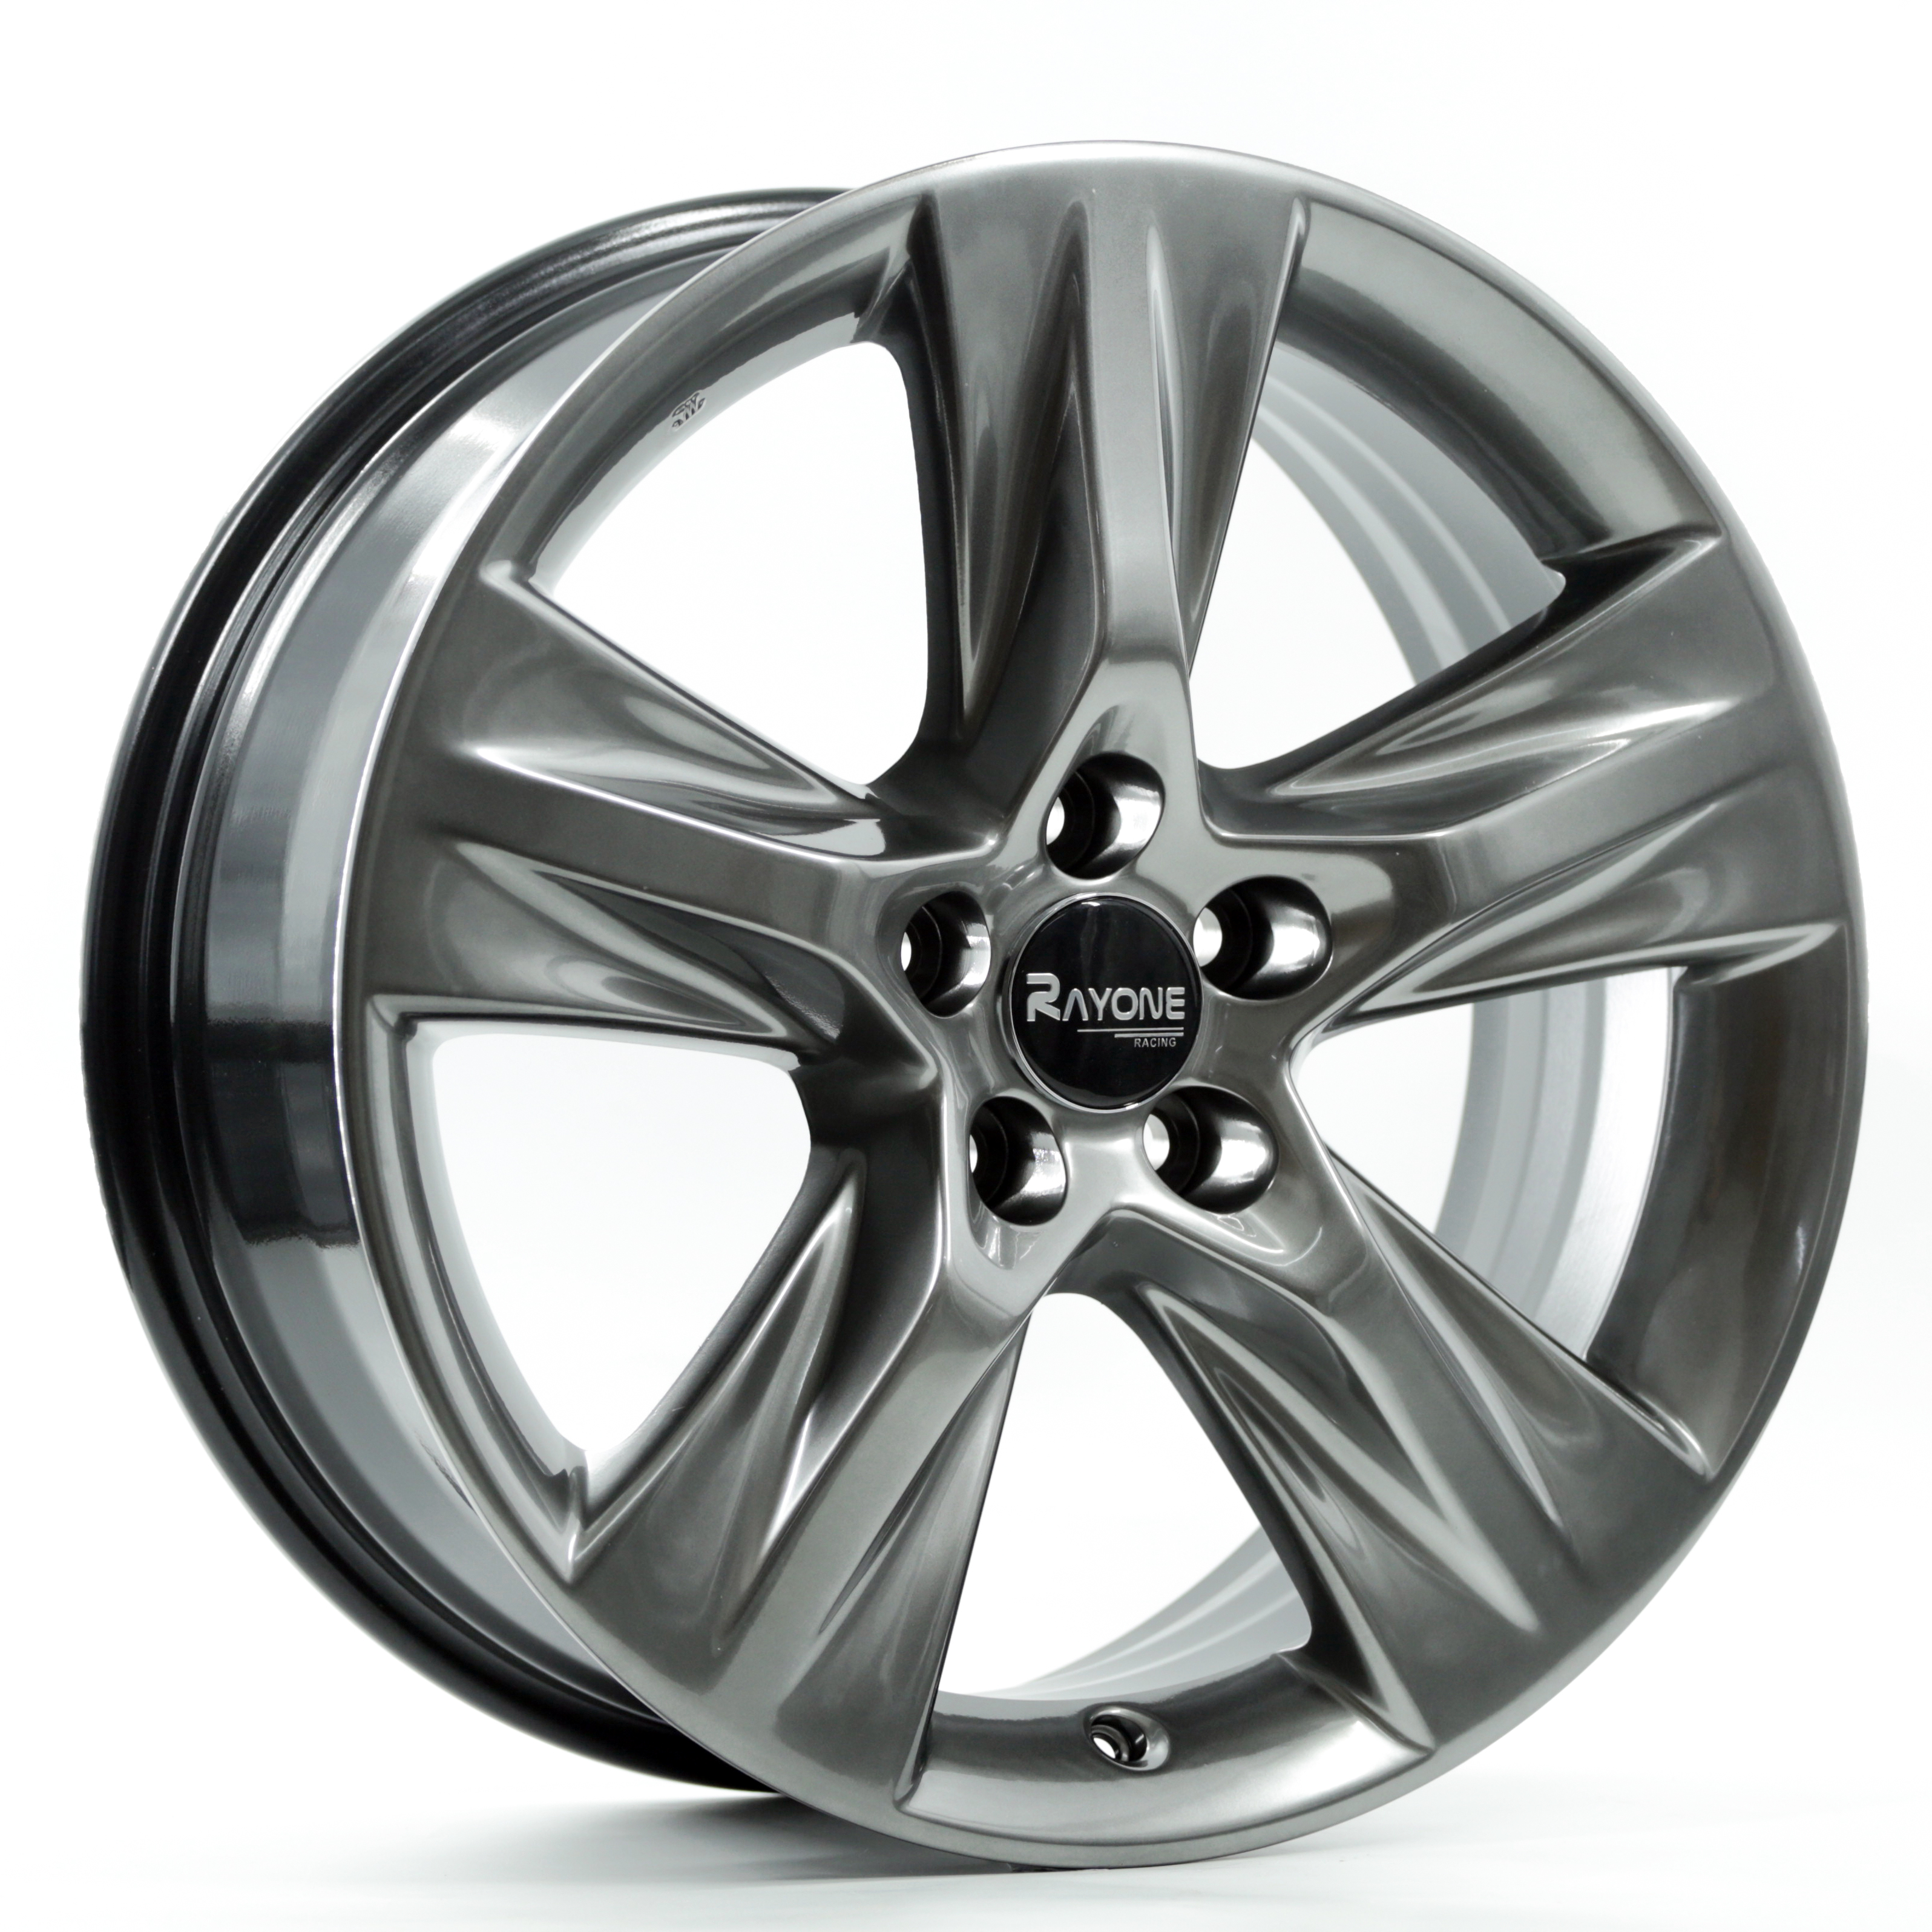 Rayone Wheels Aluminum Alloy Wheels 19inch Light Wheels For HIGHLAND